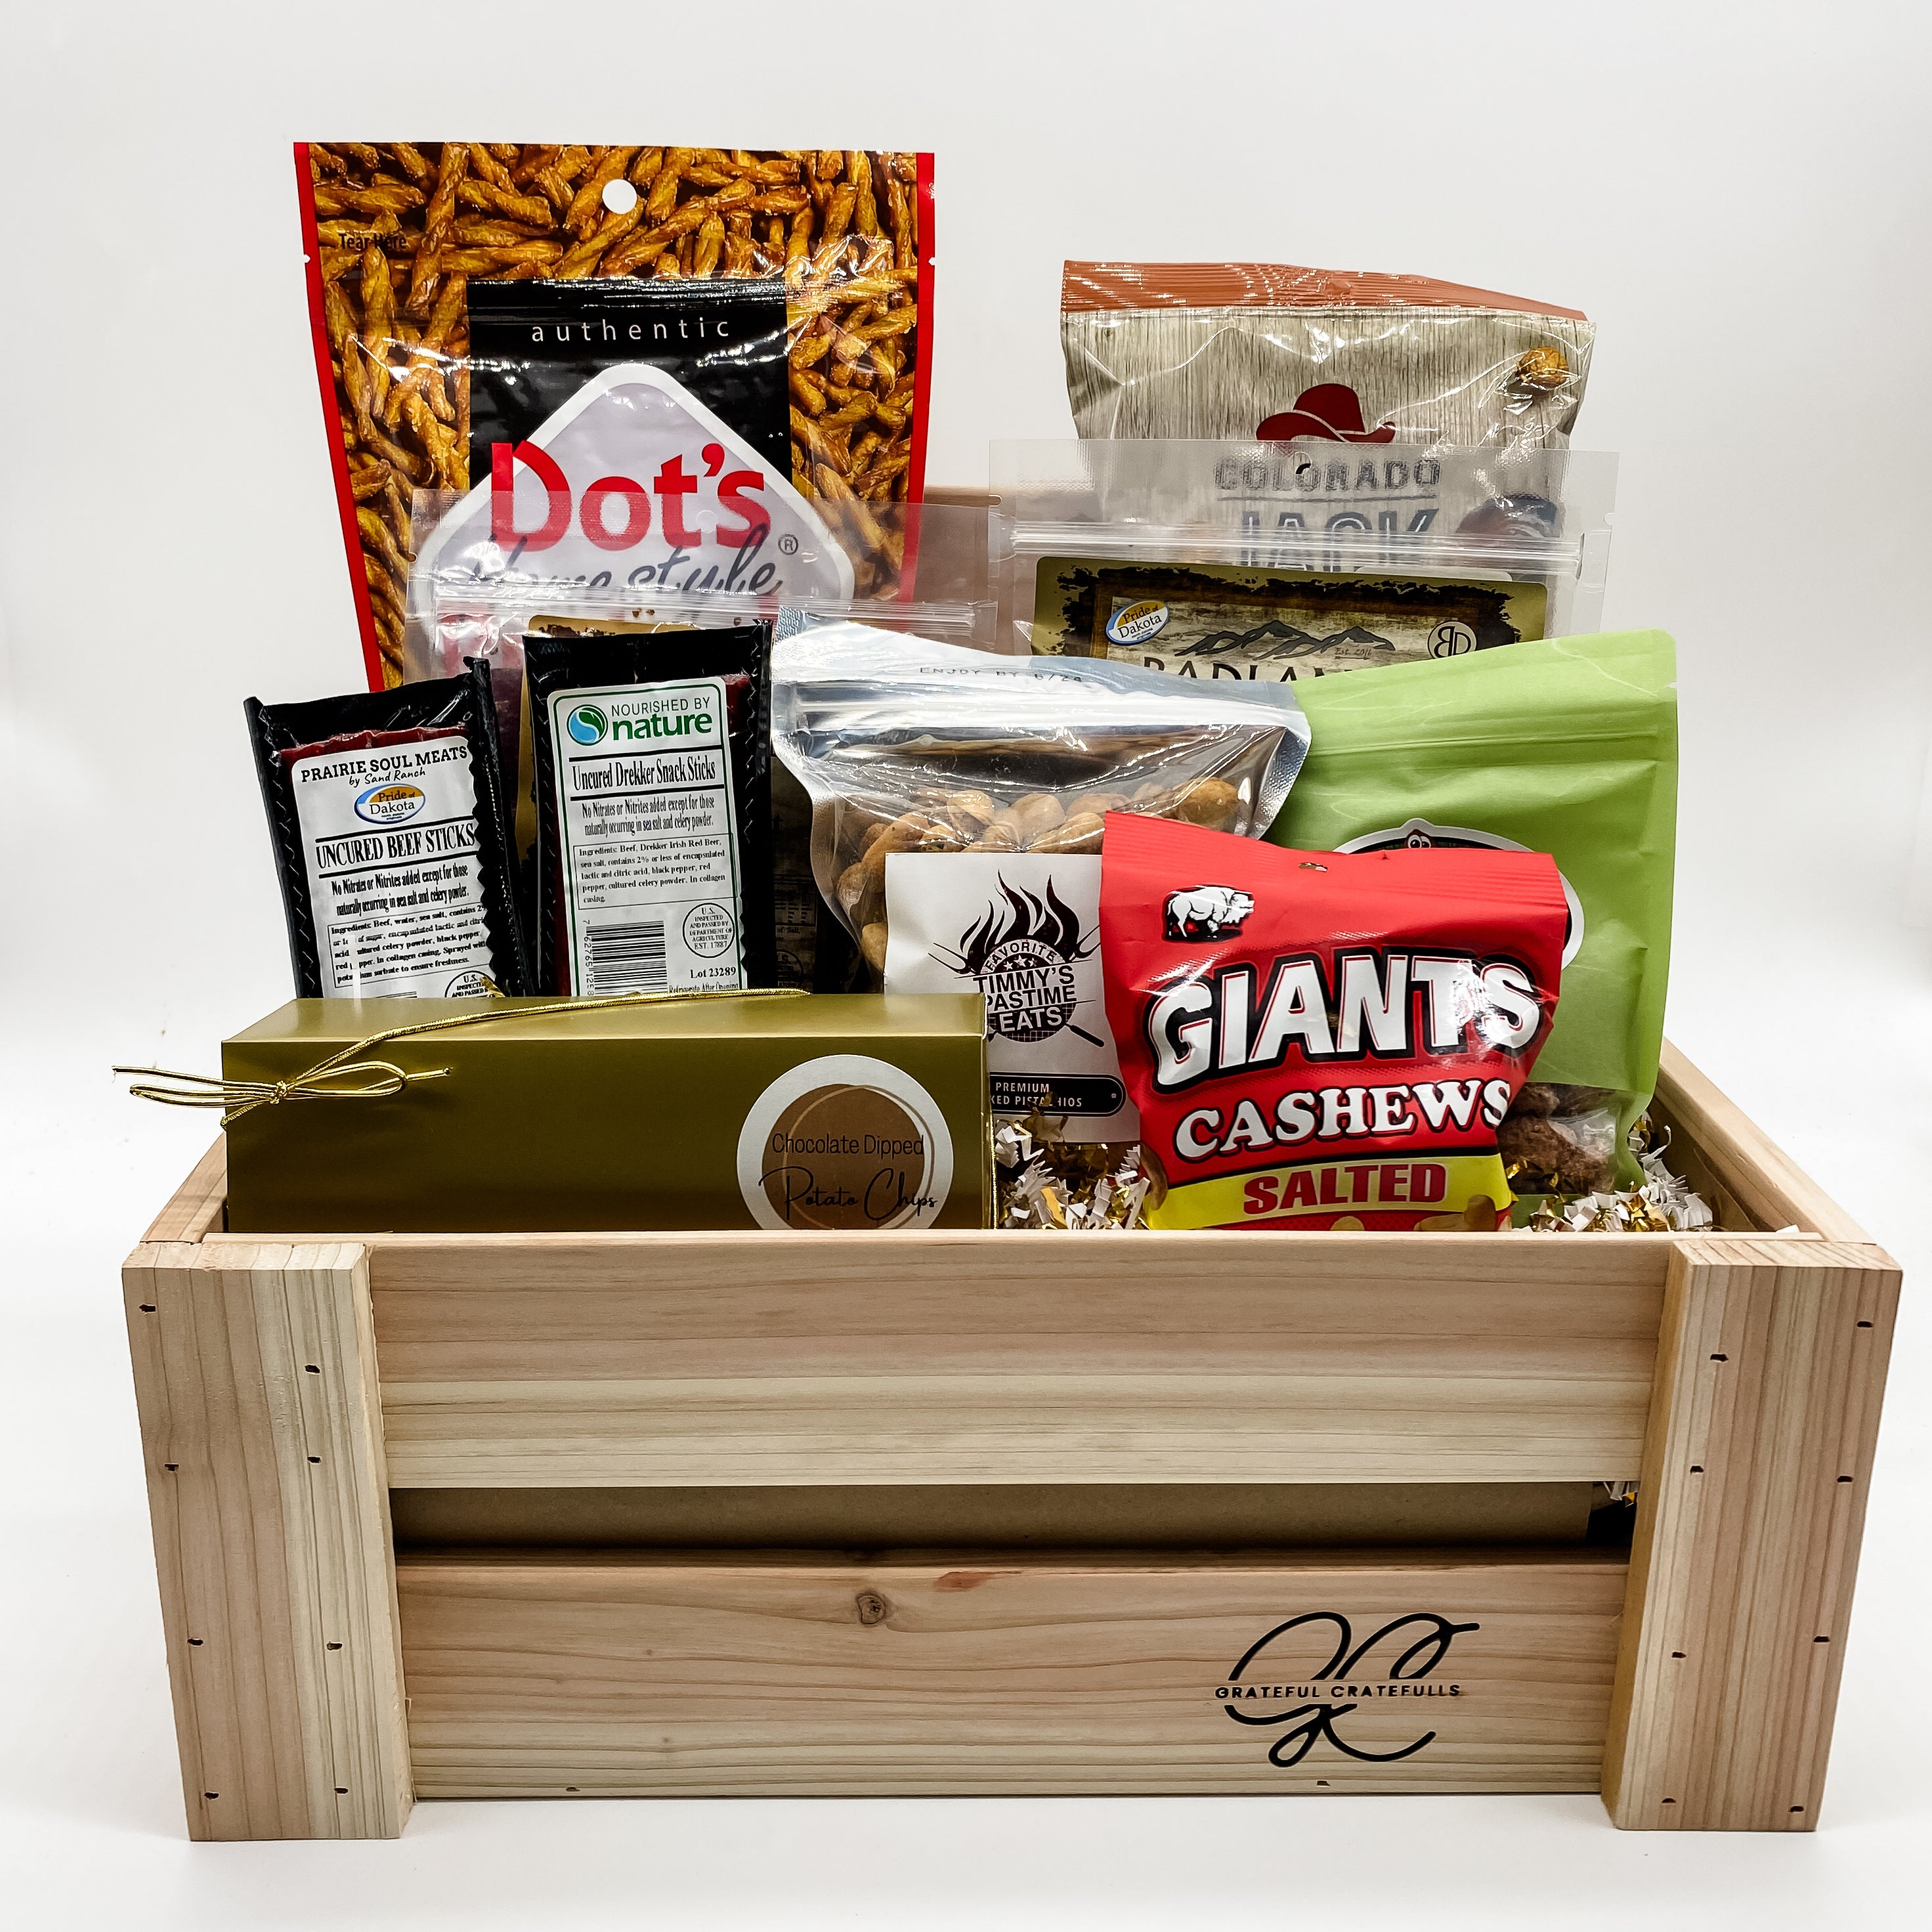 Make a Driftwood Gift Crate - Pretty Handy Girl